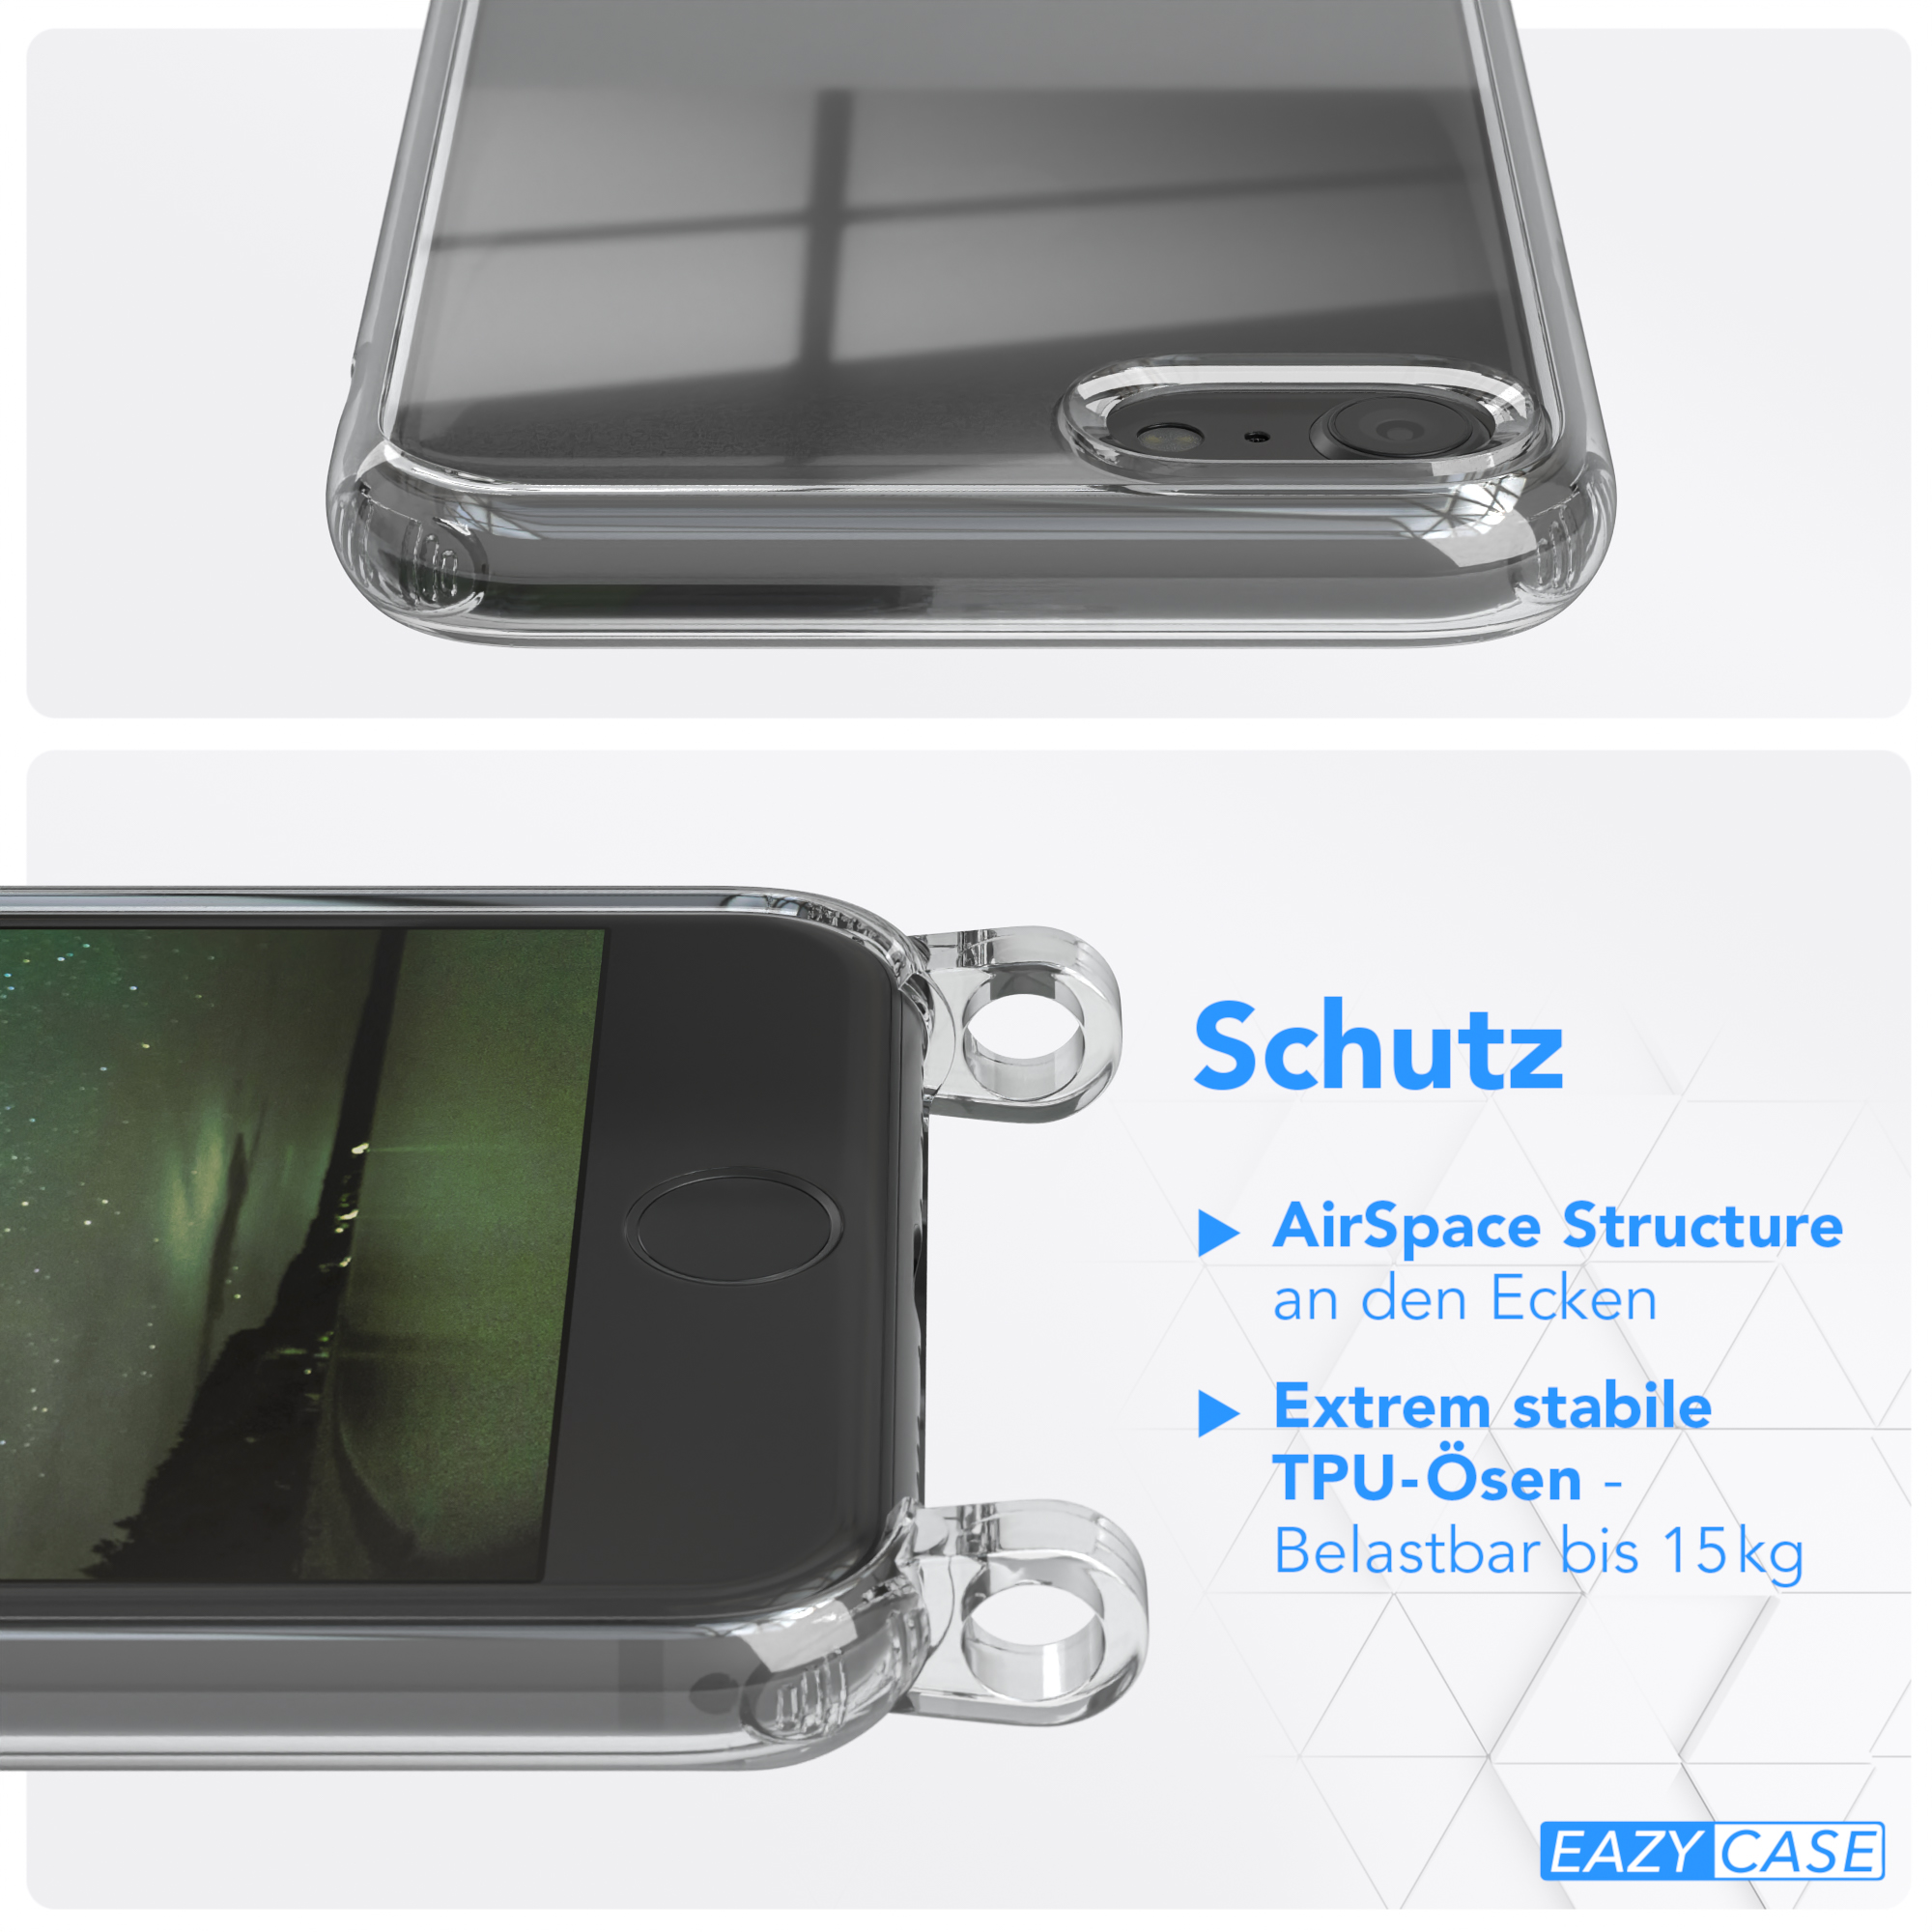 2022 Handyhülle runder iPhone 7 CASE unifarbend, mit 2020, EAZY Apple, iPhone Dunkelgrün Kette Umhängetasche, Transparente SE / 8, Nachtgrün SE / /